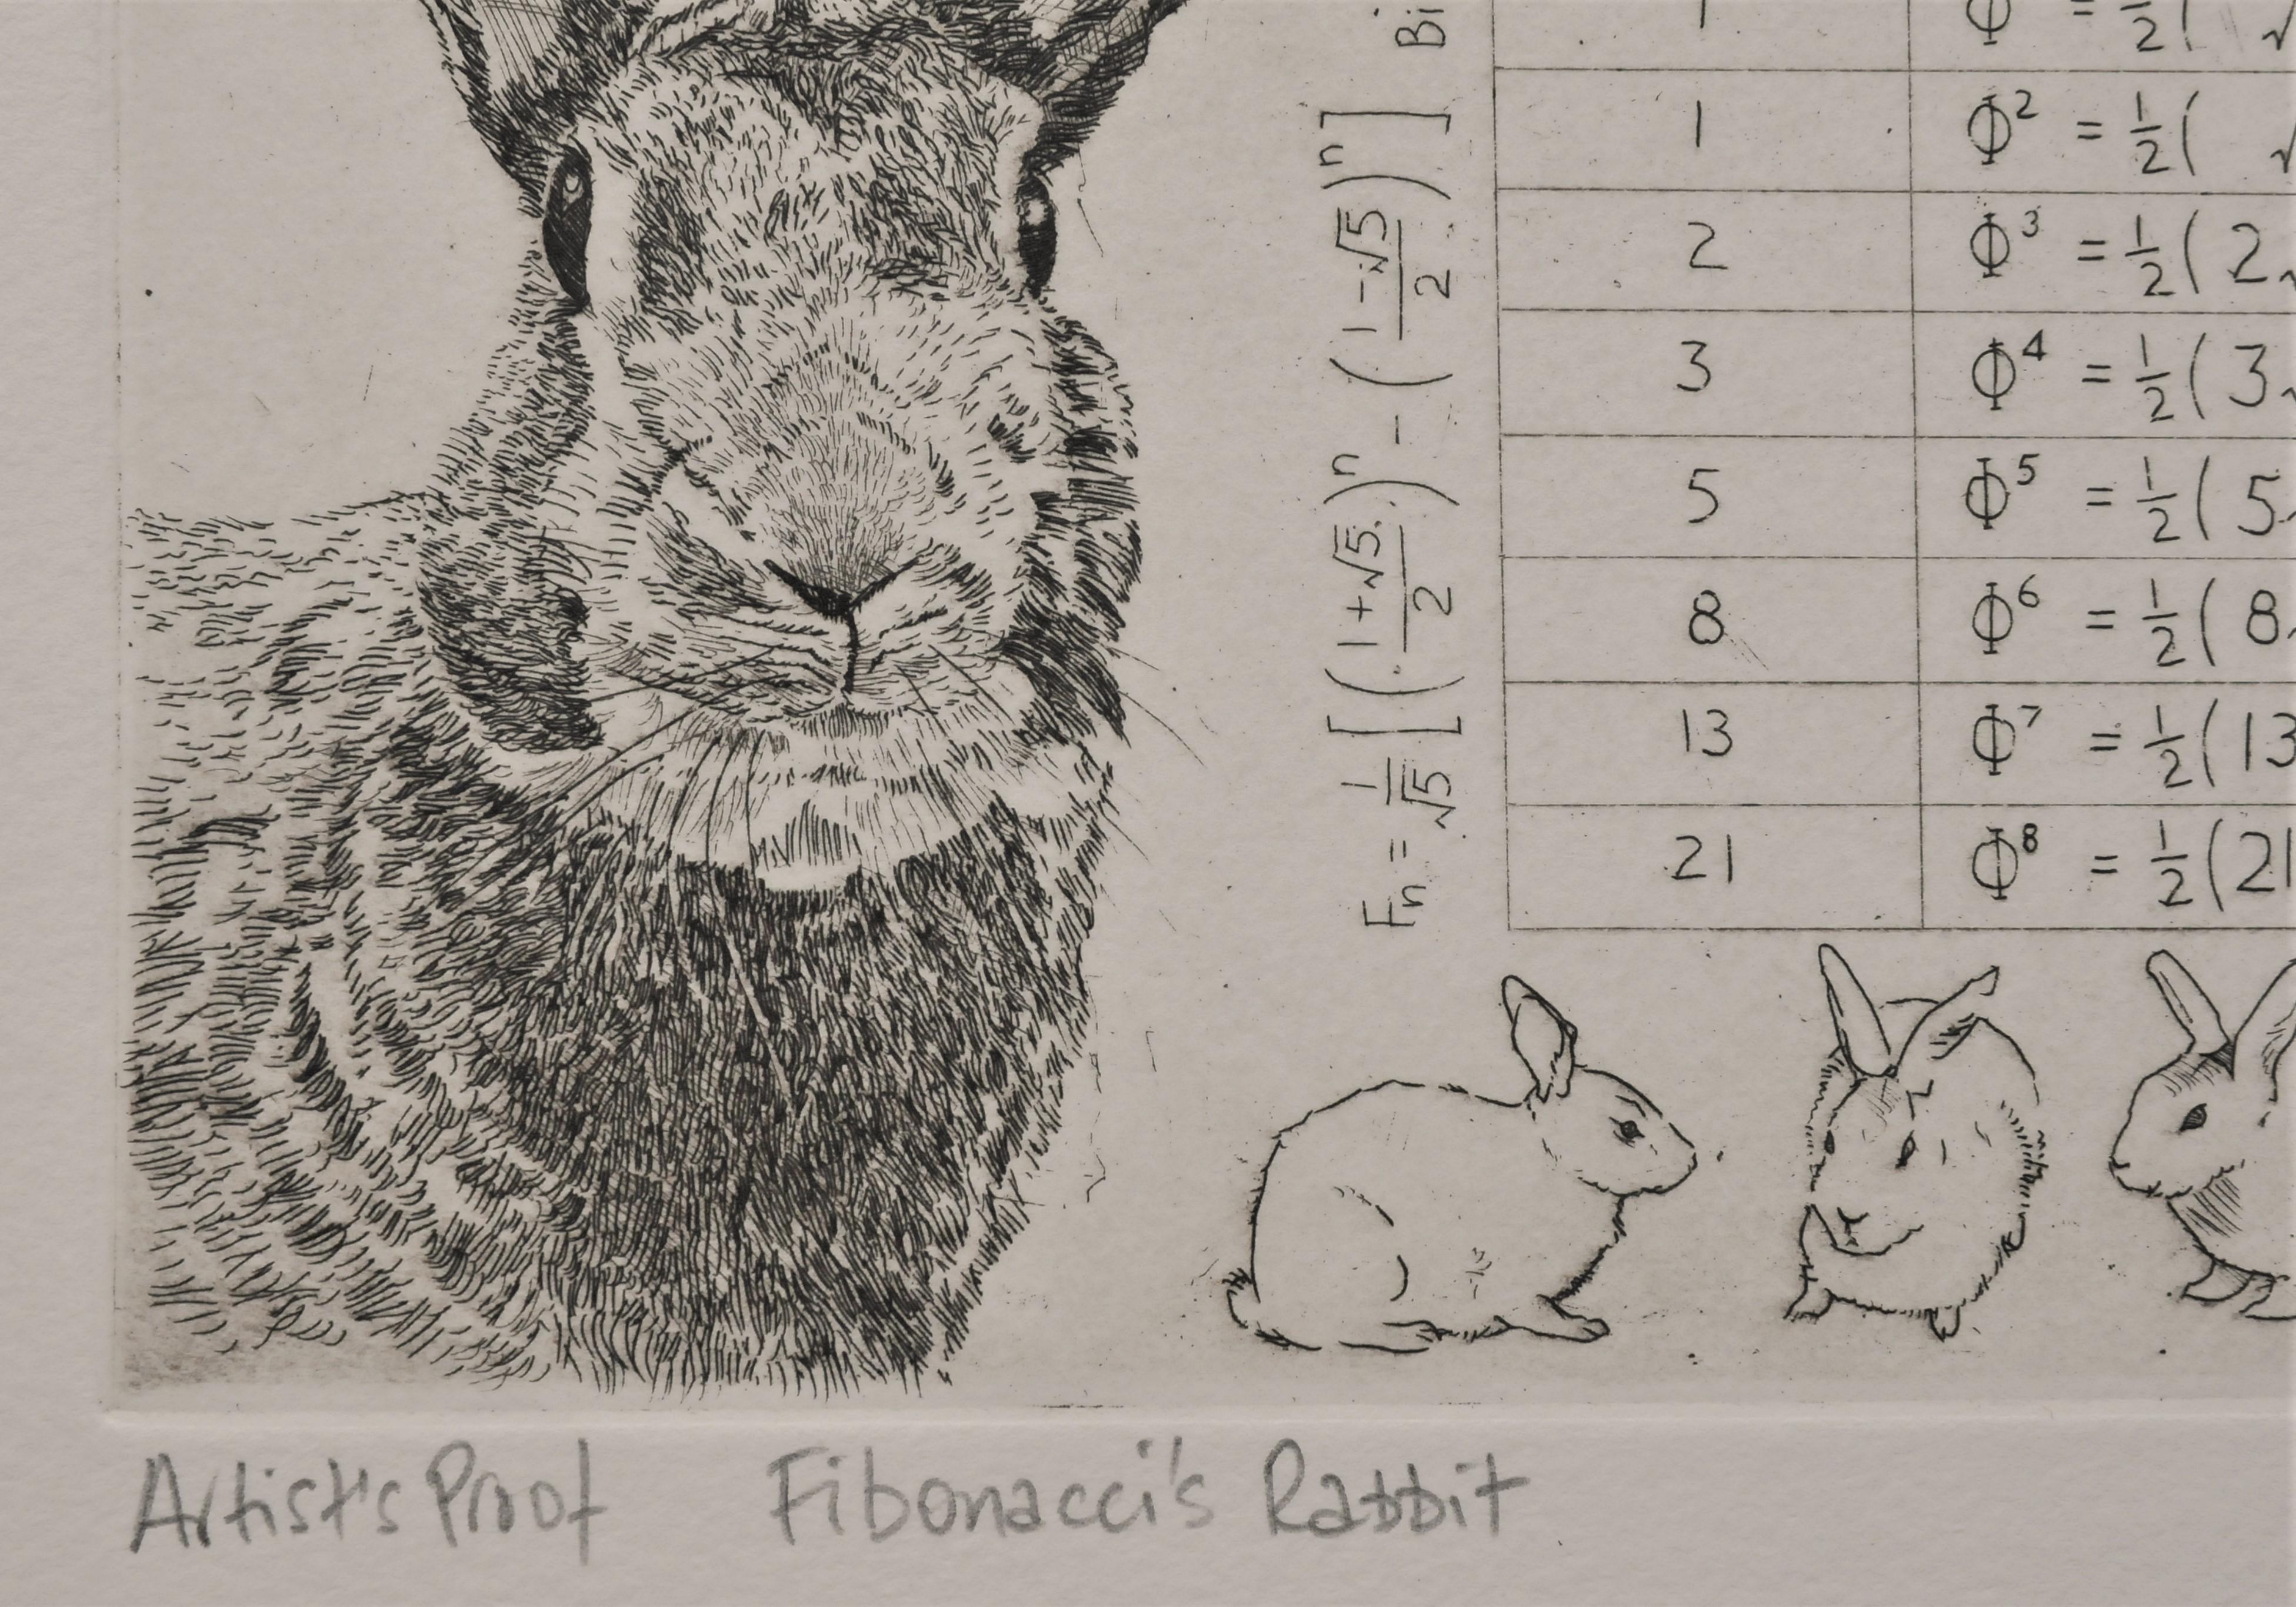 Fibonacci's Rabbit, Art print, Animal Art, Mathematics - Contemporary Print by Will Taylor